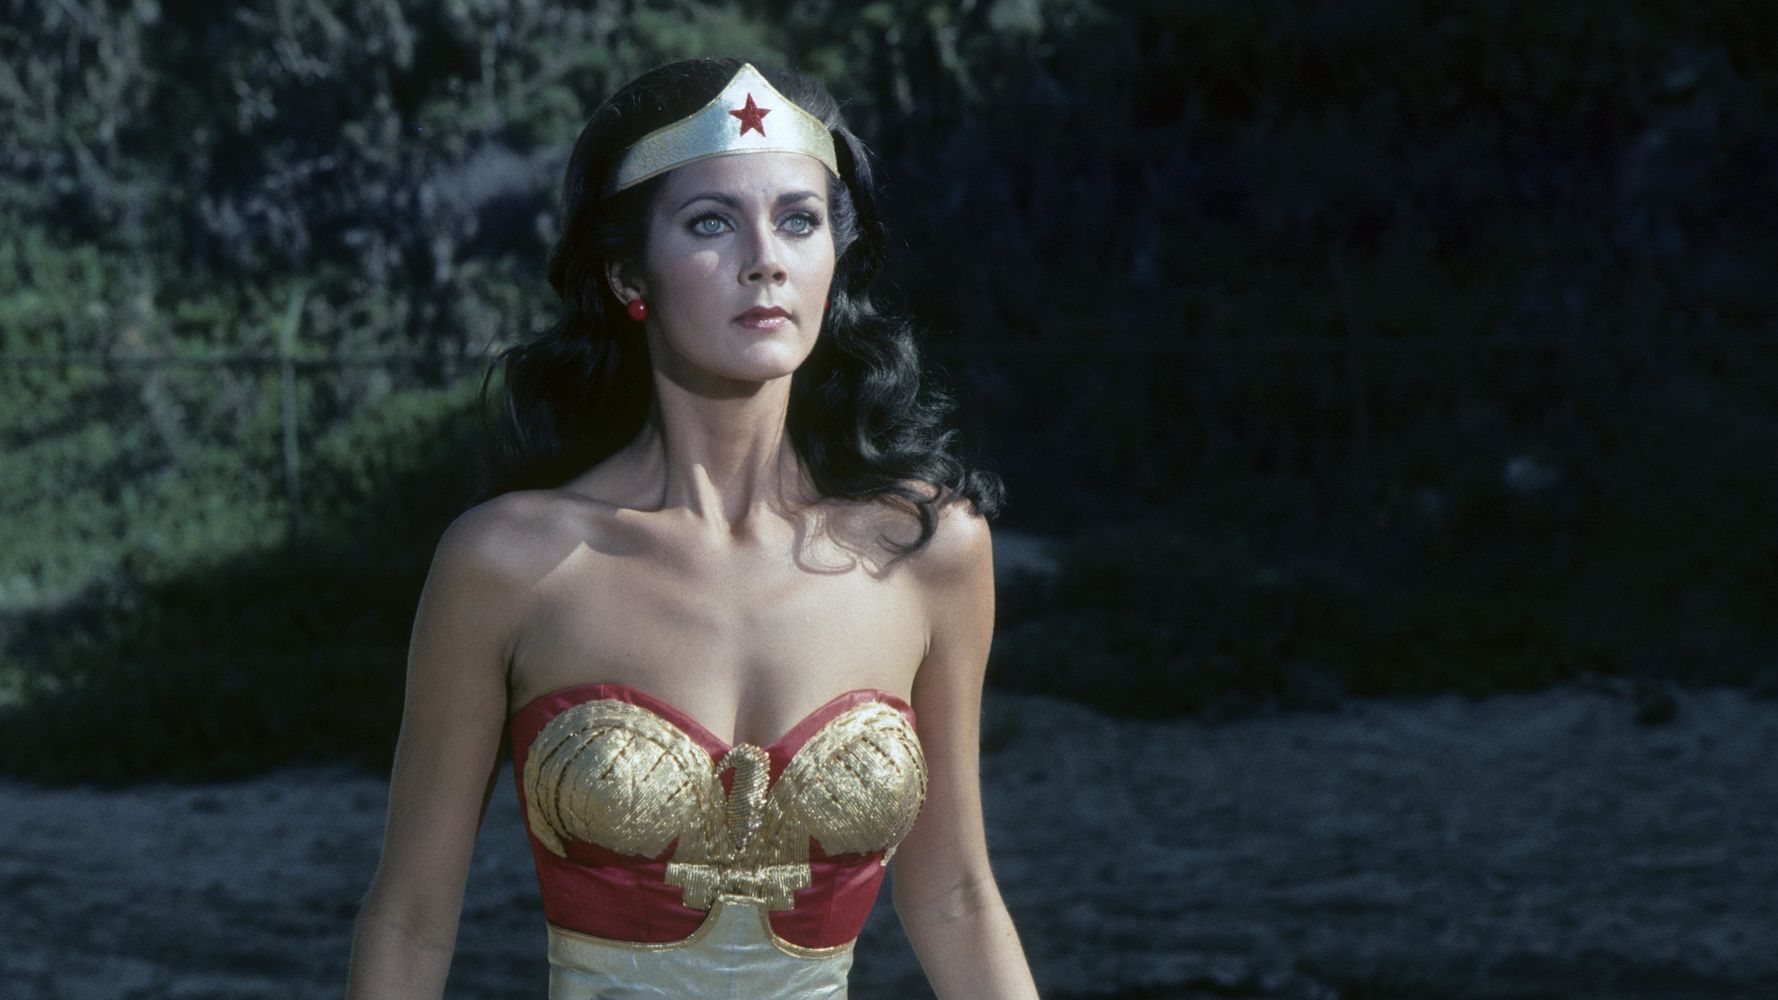 Lynda Carter, The Original Wonder Woman, Shares Her Own Me Too Story |  HuffPost Women